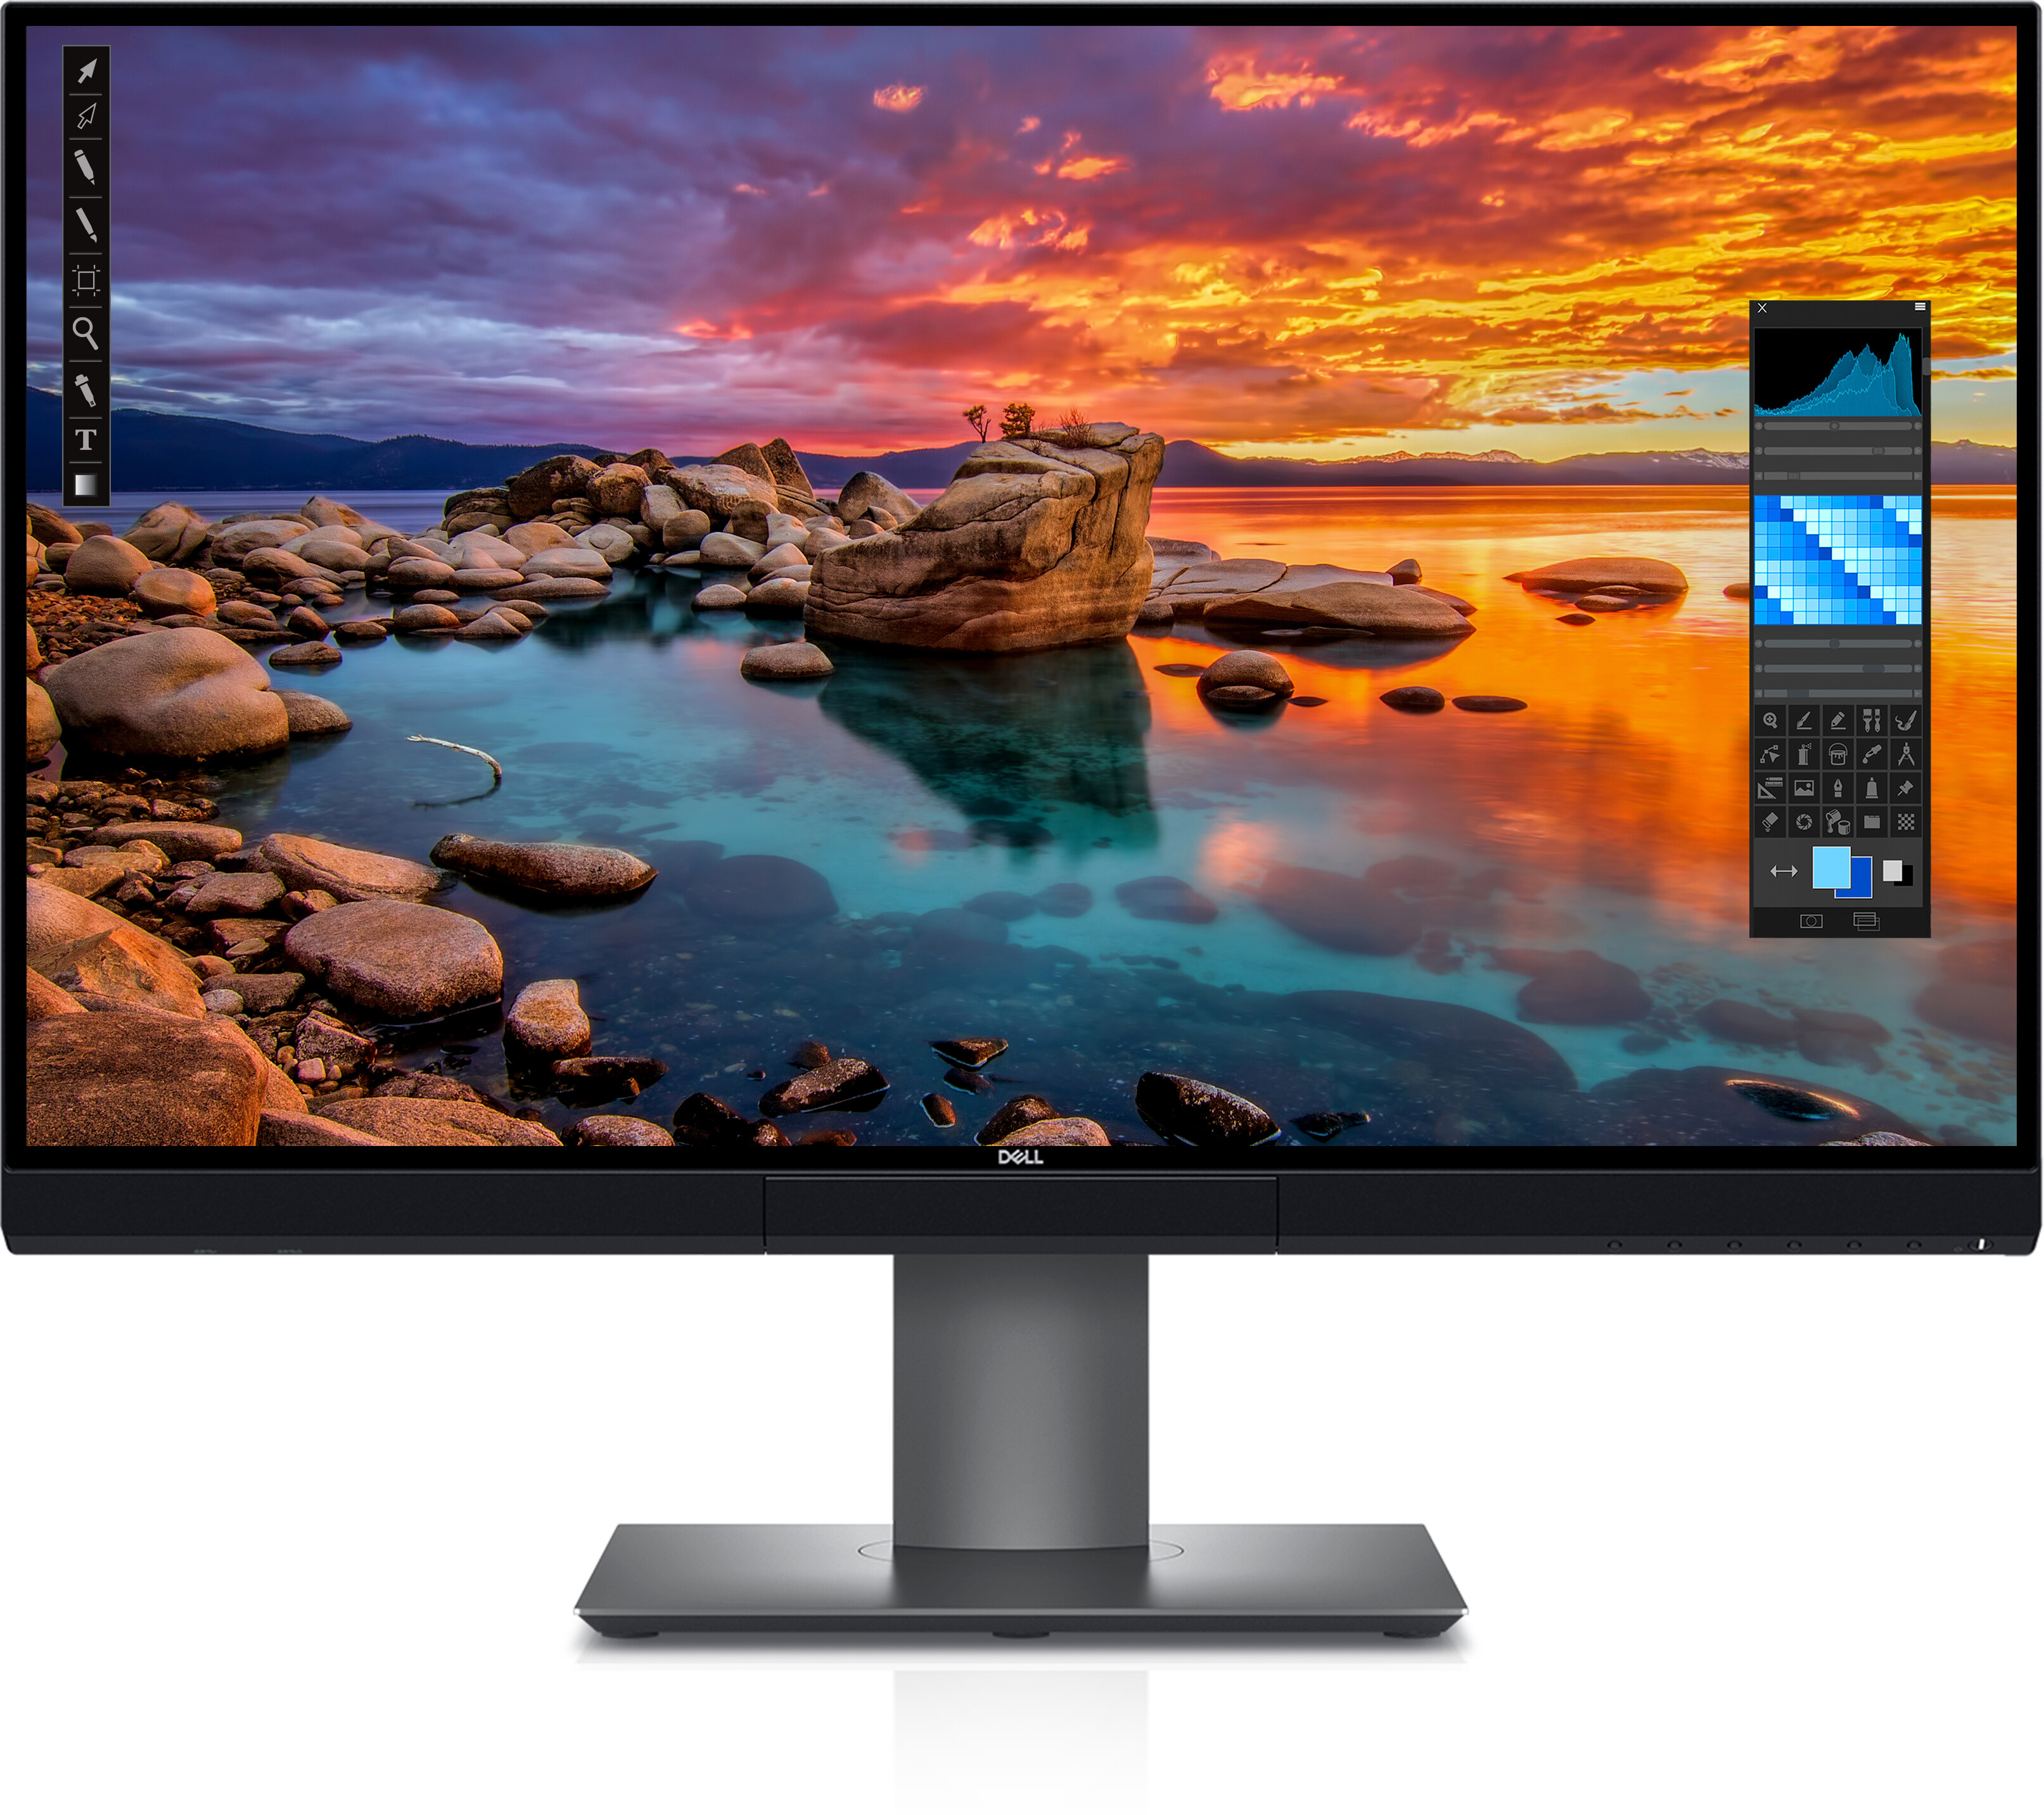 Dell UltraSharp 27 4K PremierColor Monitor: UP2720Q